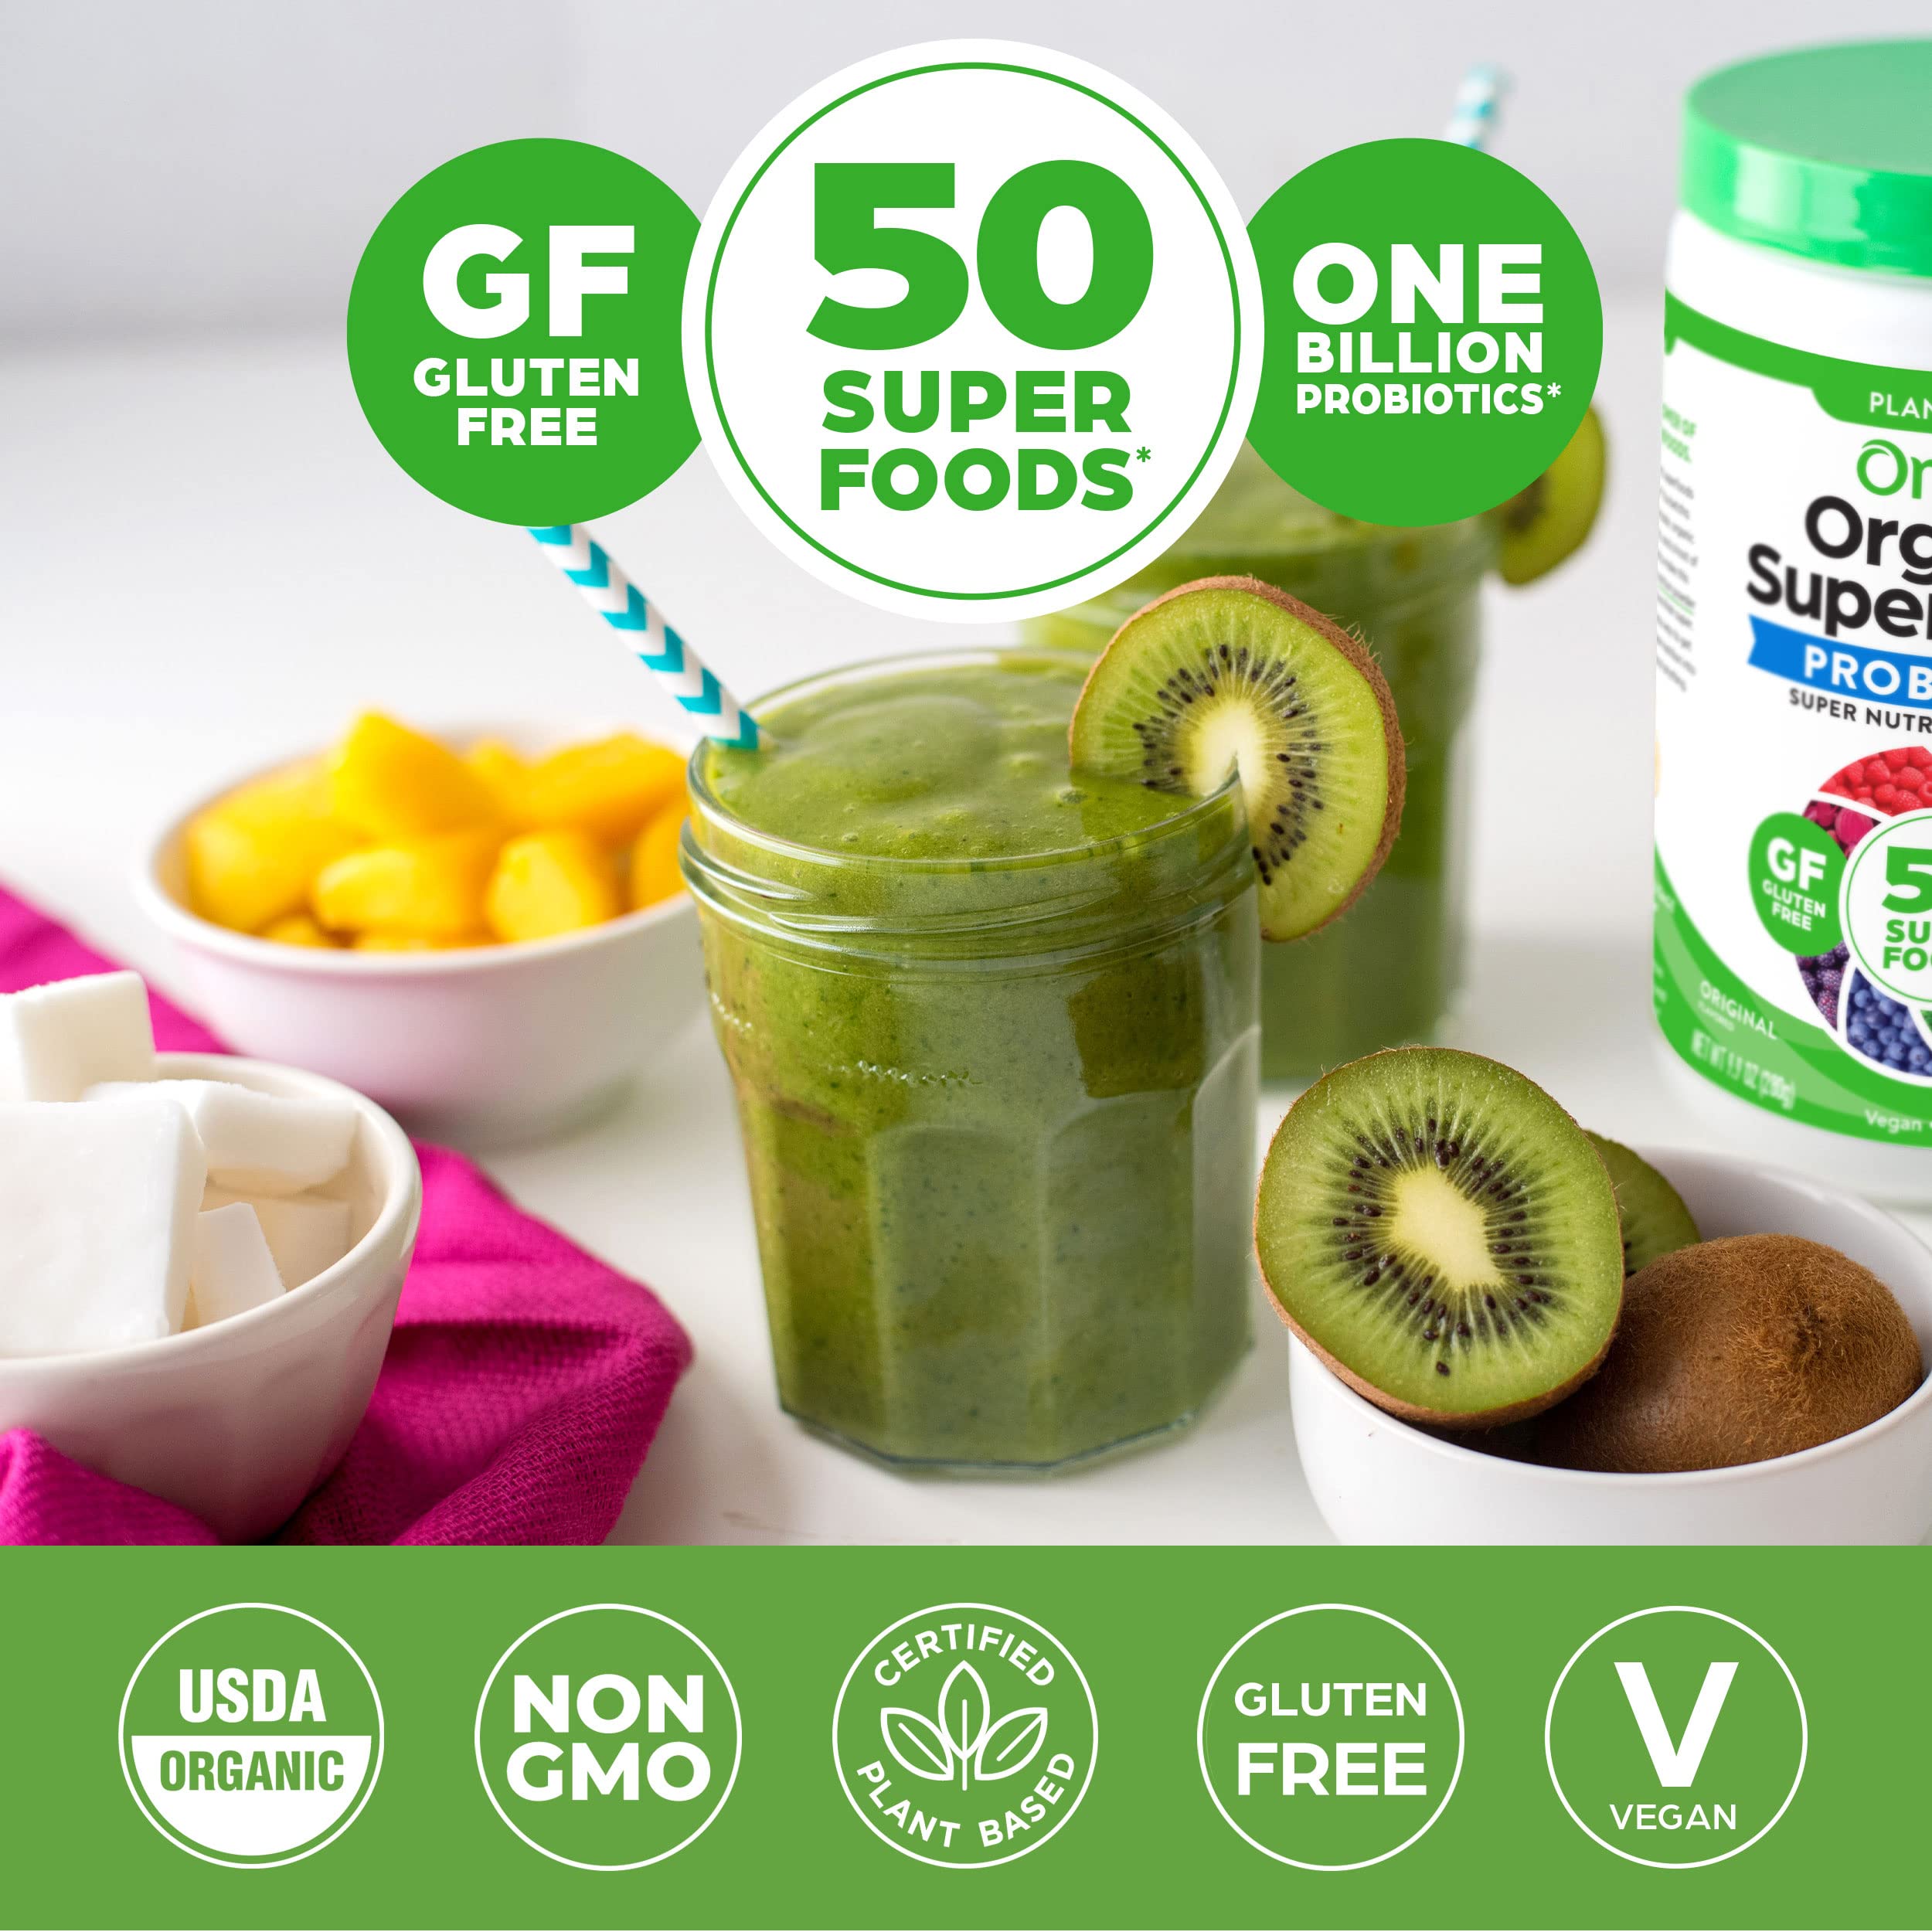 Orgain Organic Greens Powder + 50 Superfoods, Original - 1 Billion Probiotics for Gut Health, Antioxidants, Vegan, Plant Based, Gluten Free, Non GMO, Dairy Free Juice & Smoothie Mix - 0.62lb